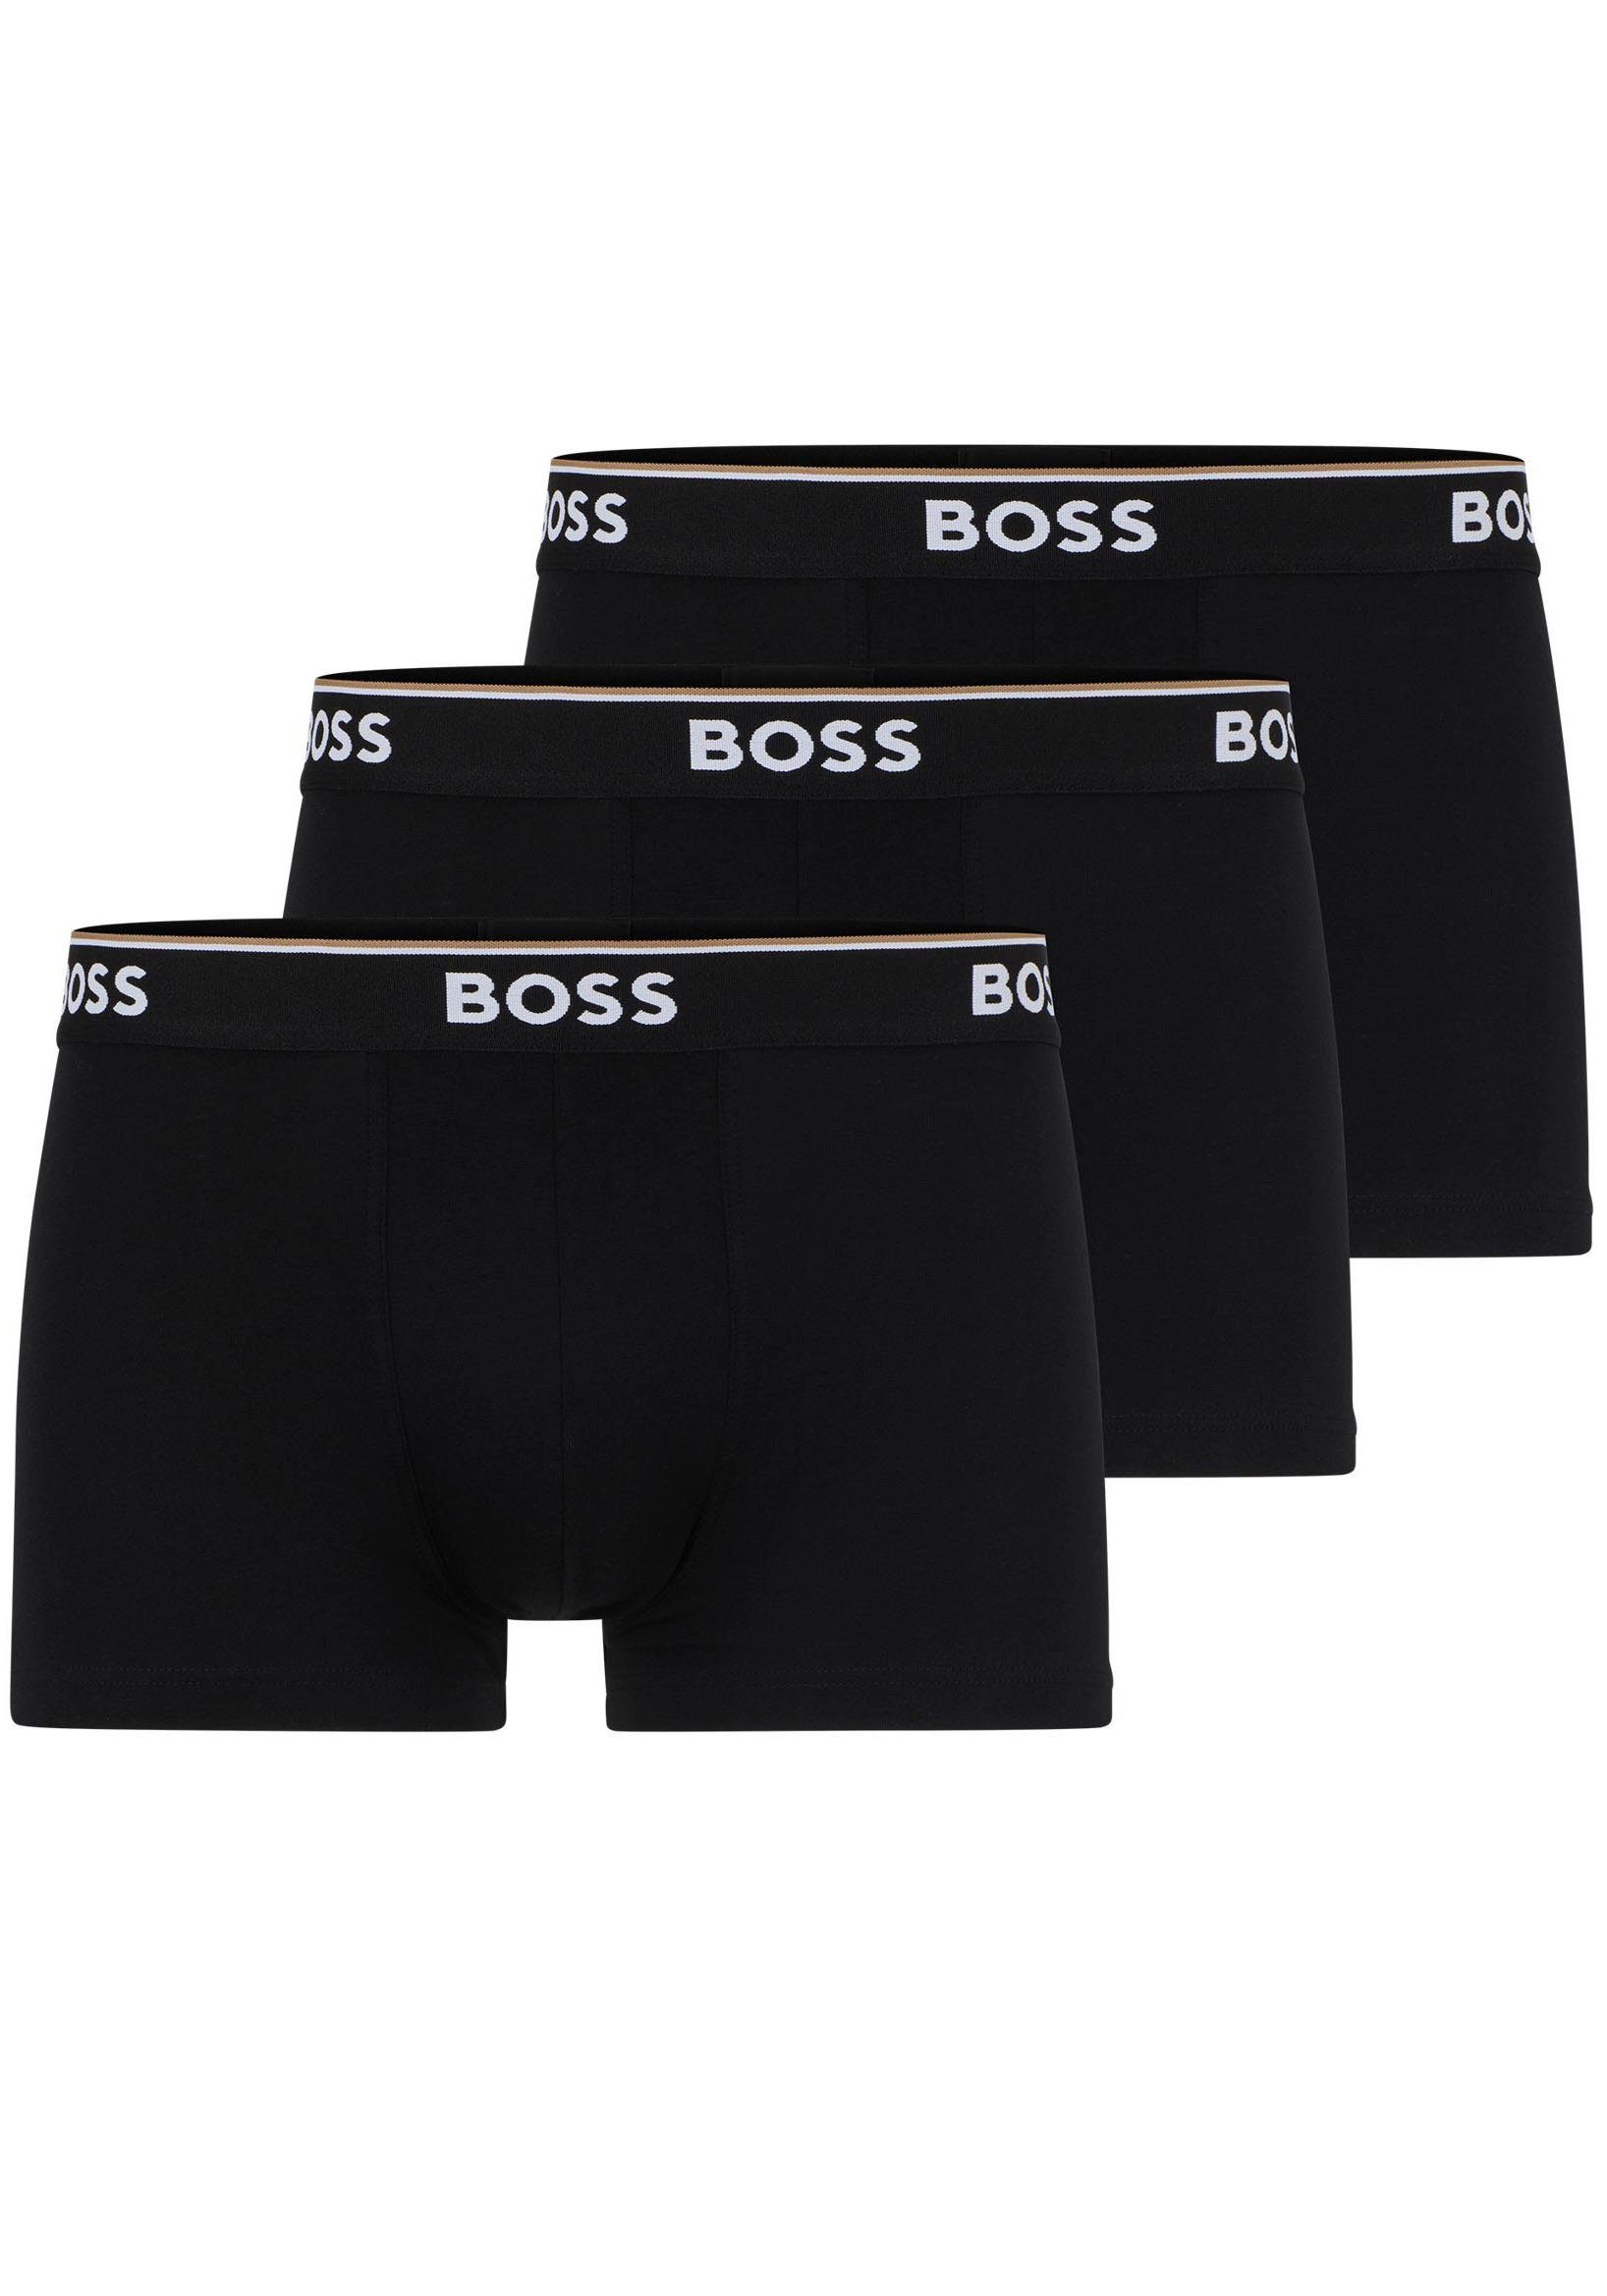 3er-Pack) Webbund black mit (Packung, BOSS Boxer Logo